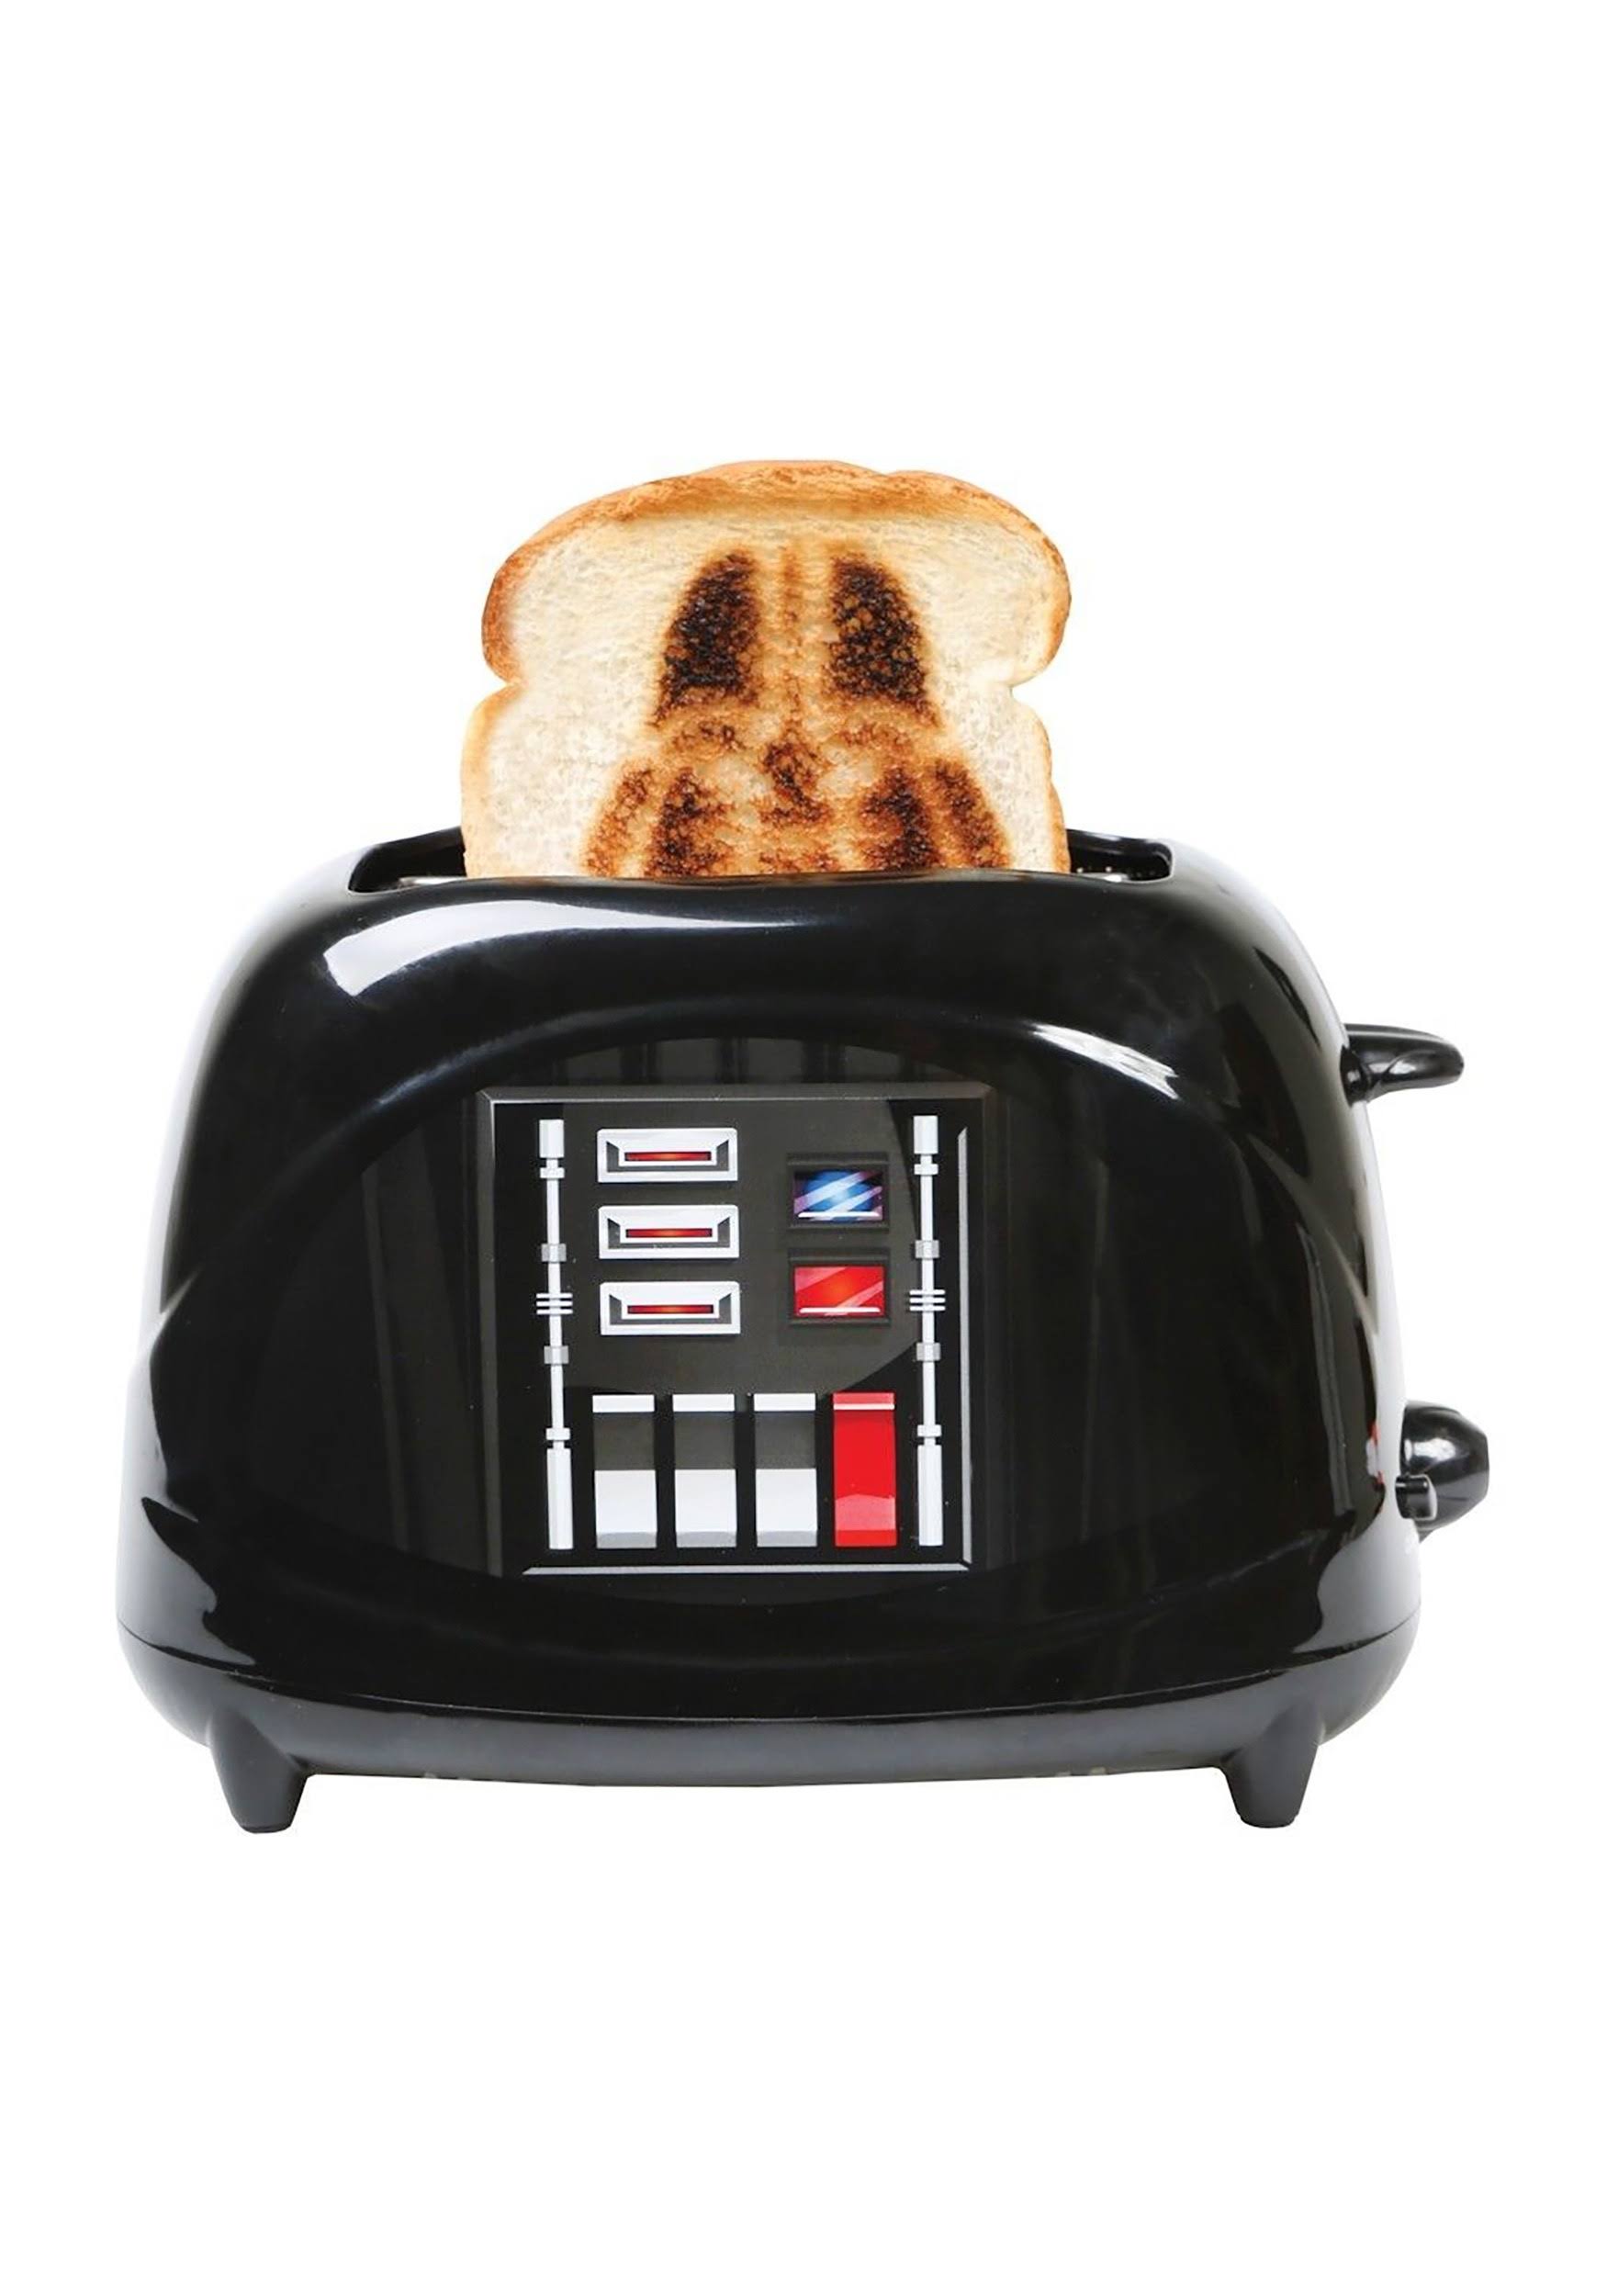 Star Wars Darth Vader Costume Elite Toaster